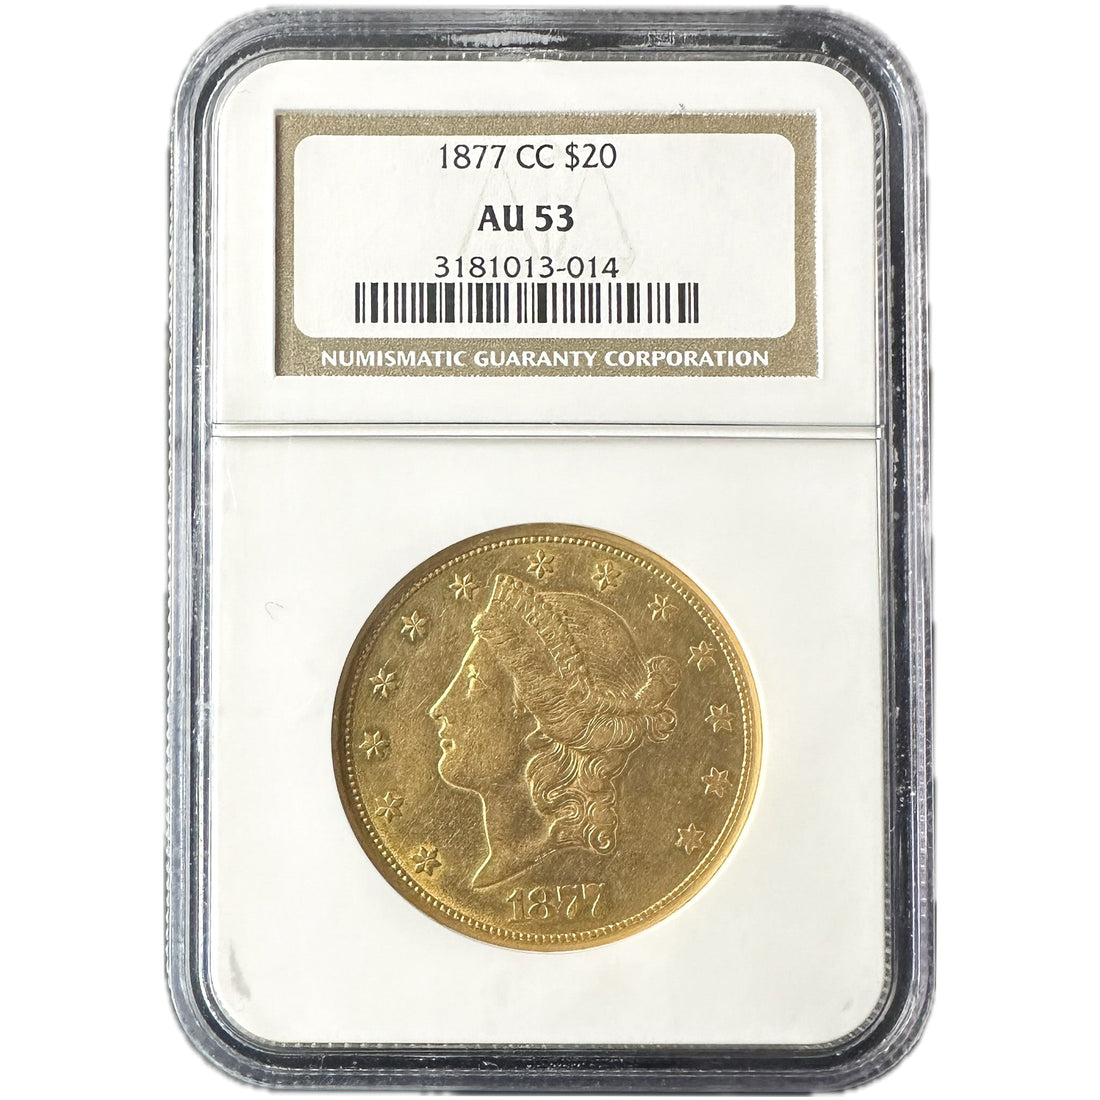 1877 CC GOLD LIBERTY HEAD US $20 Coin AU 53 - OZB